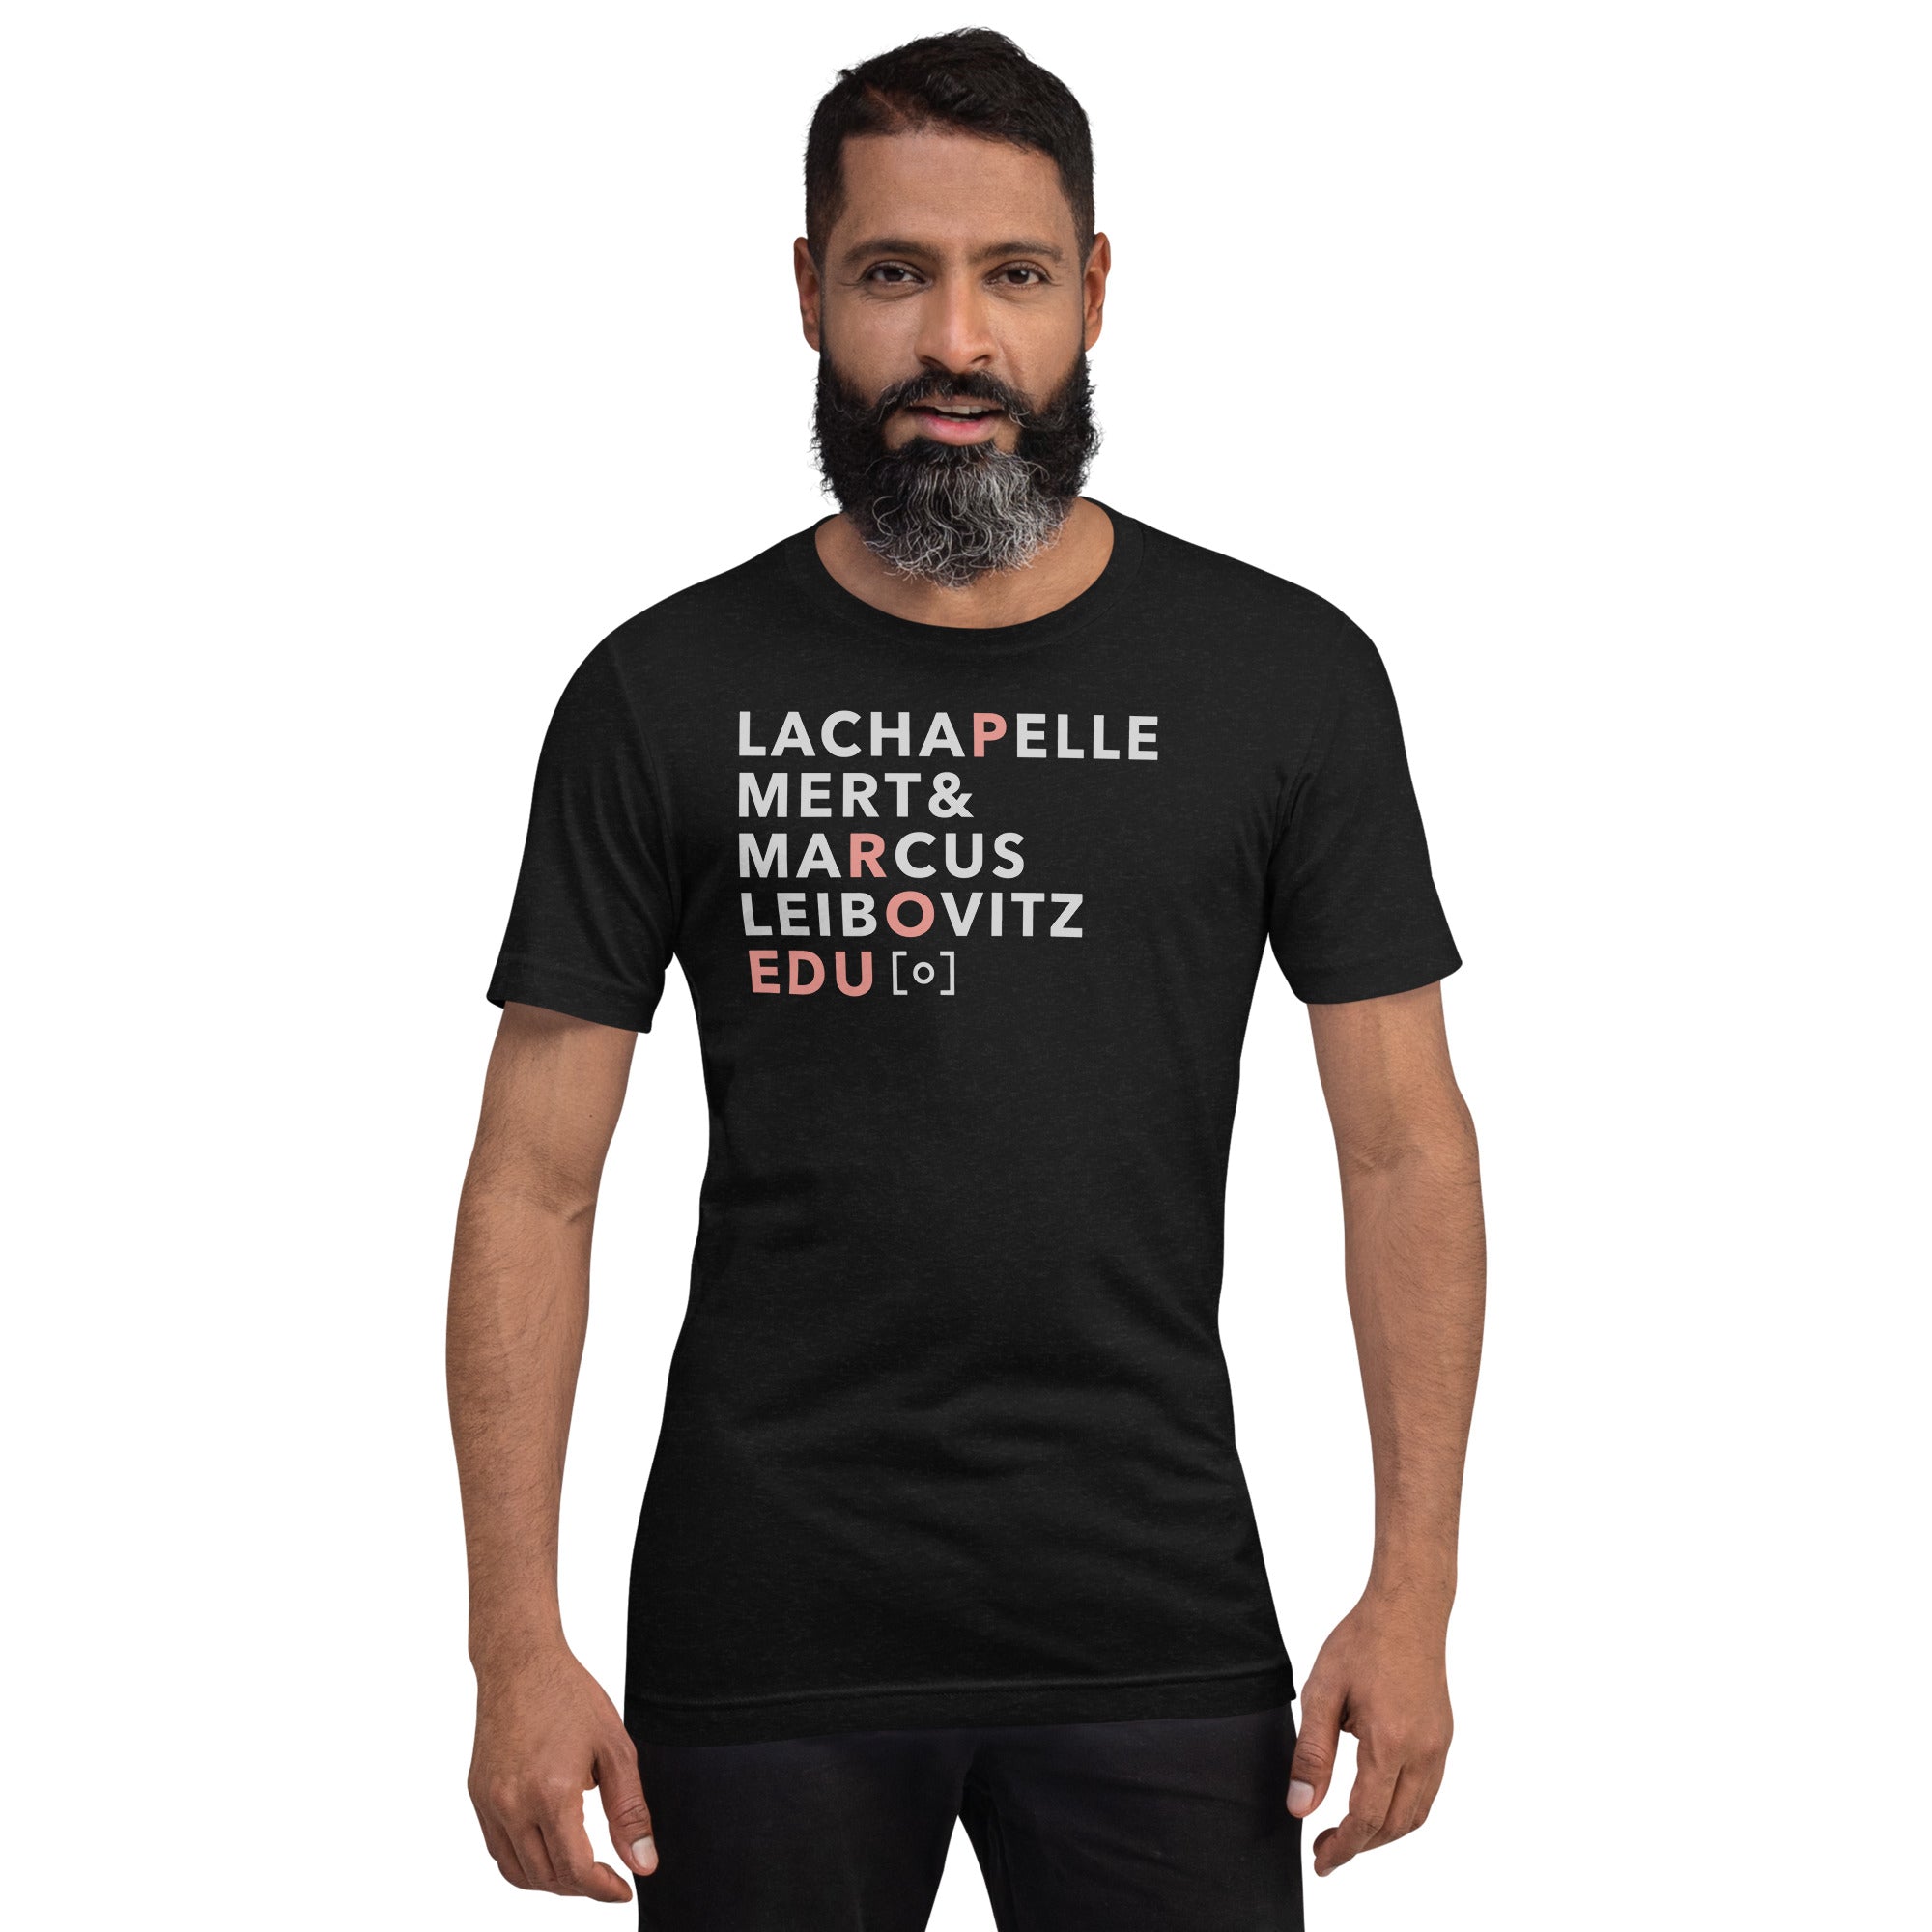 LACHAPELLE MERT & MARCUS LEIBOVITZ [o] PRO EDU Photographer T-Shirt PRO EDU PRO EDU